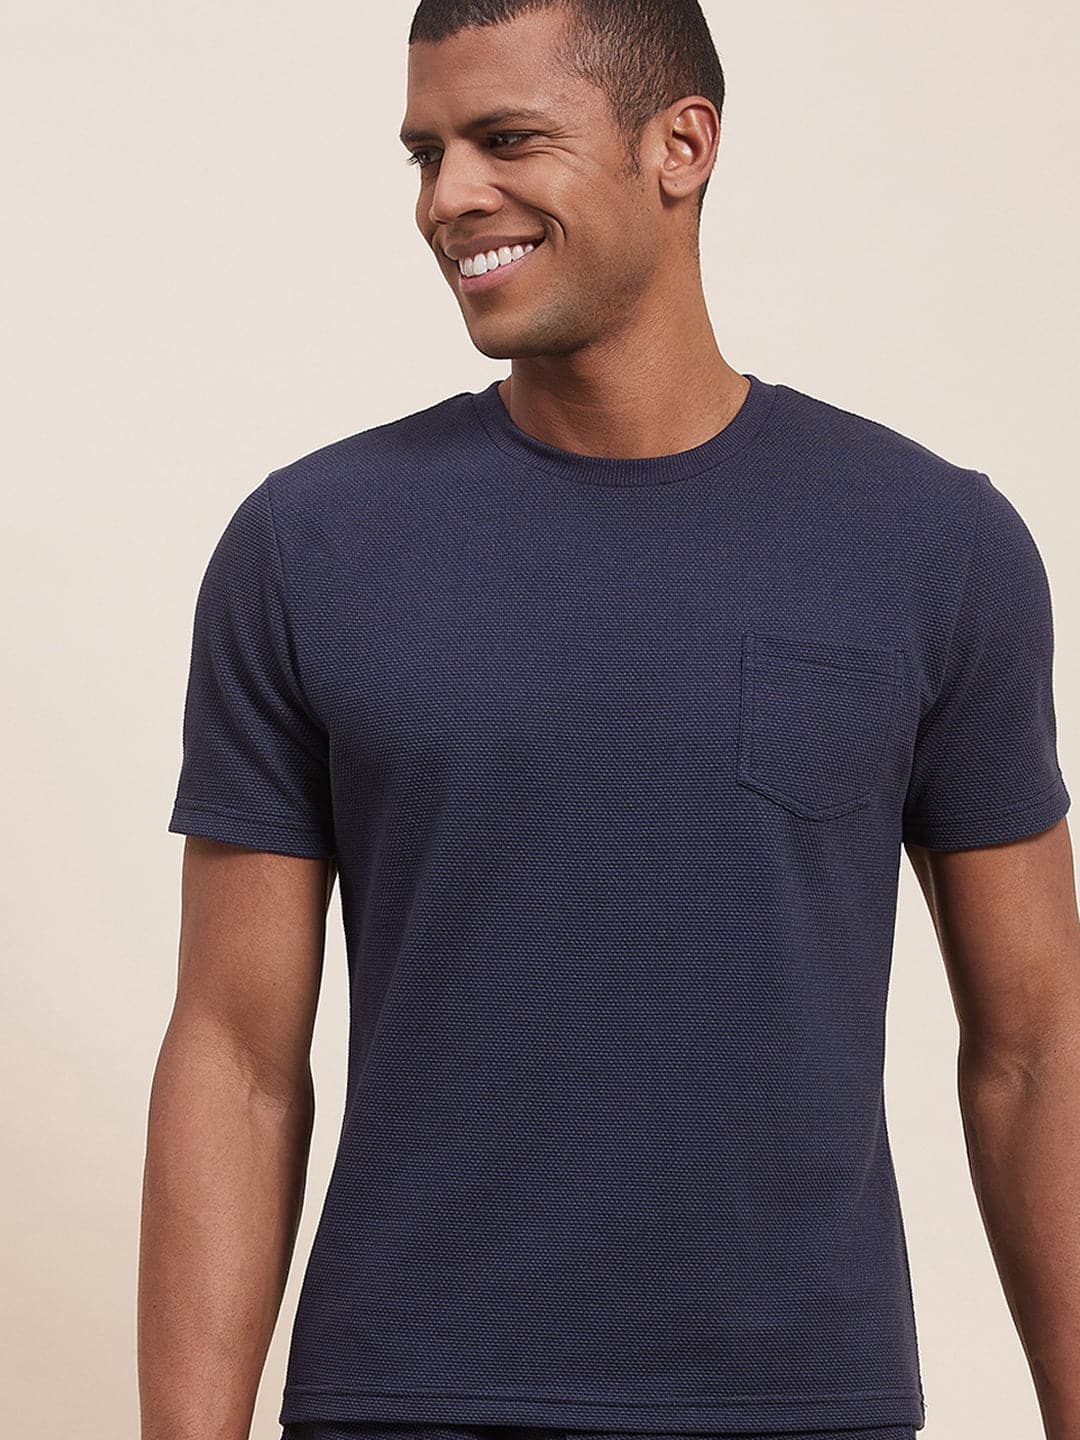 Men's Navy Slim Fit Pocket T-Shirt-Men's T-Shirt-SASSAFRAS